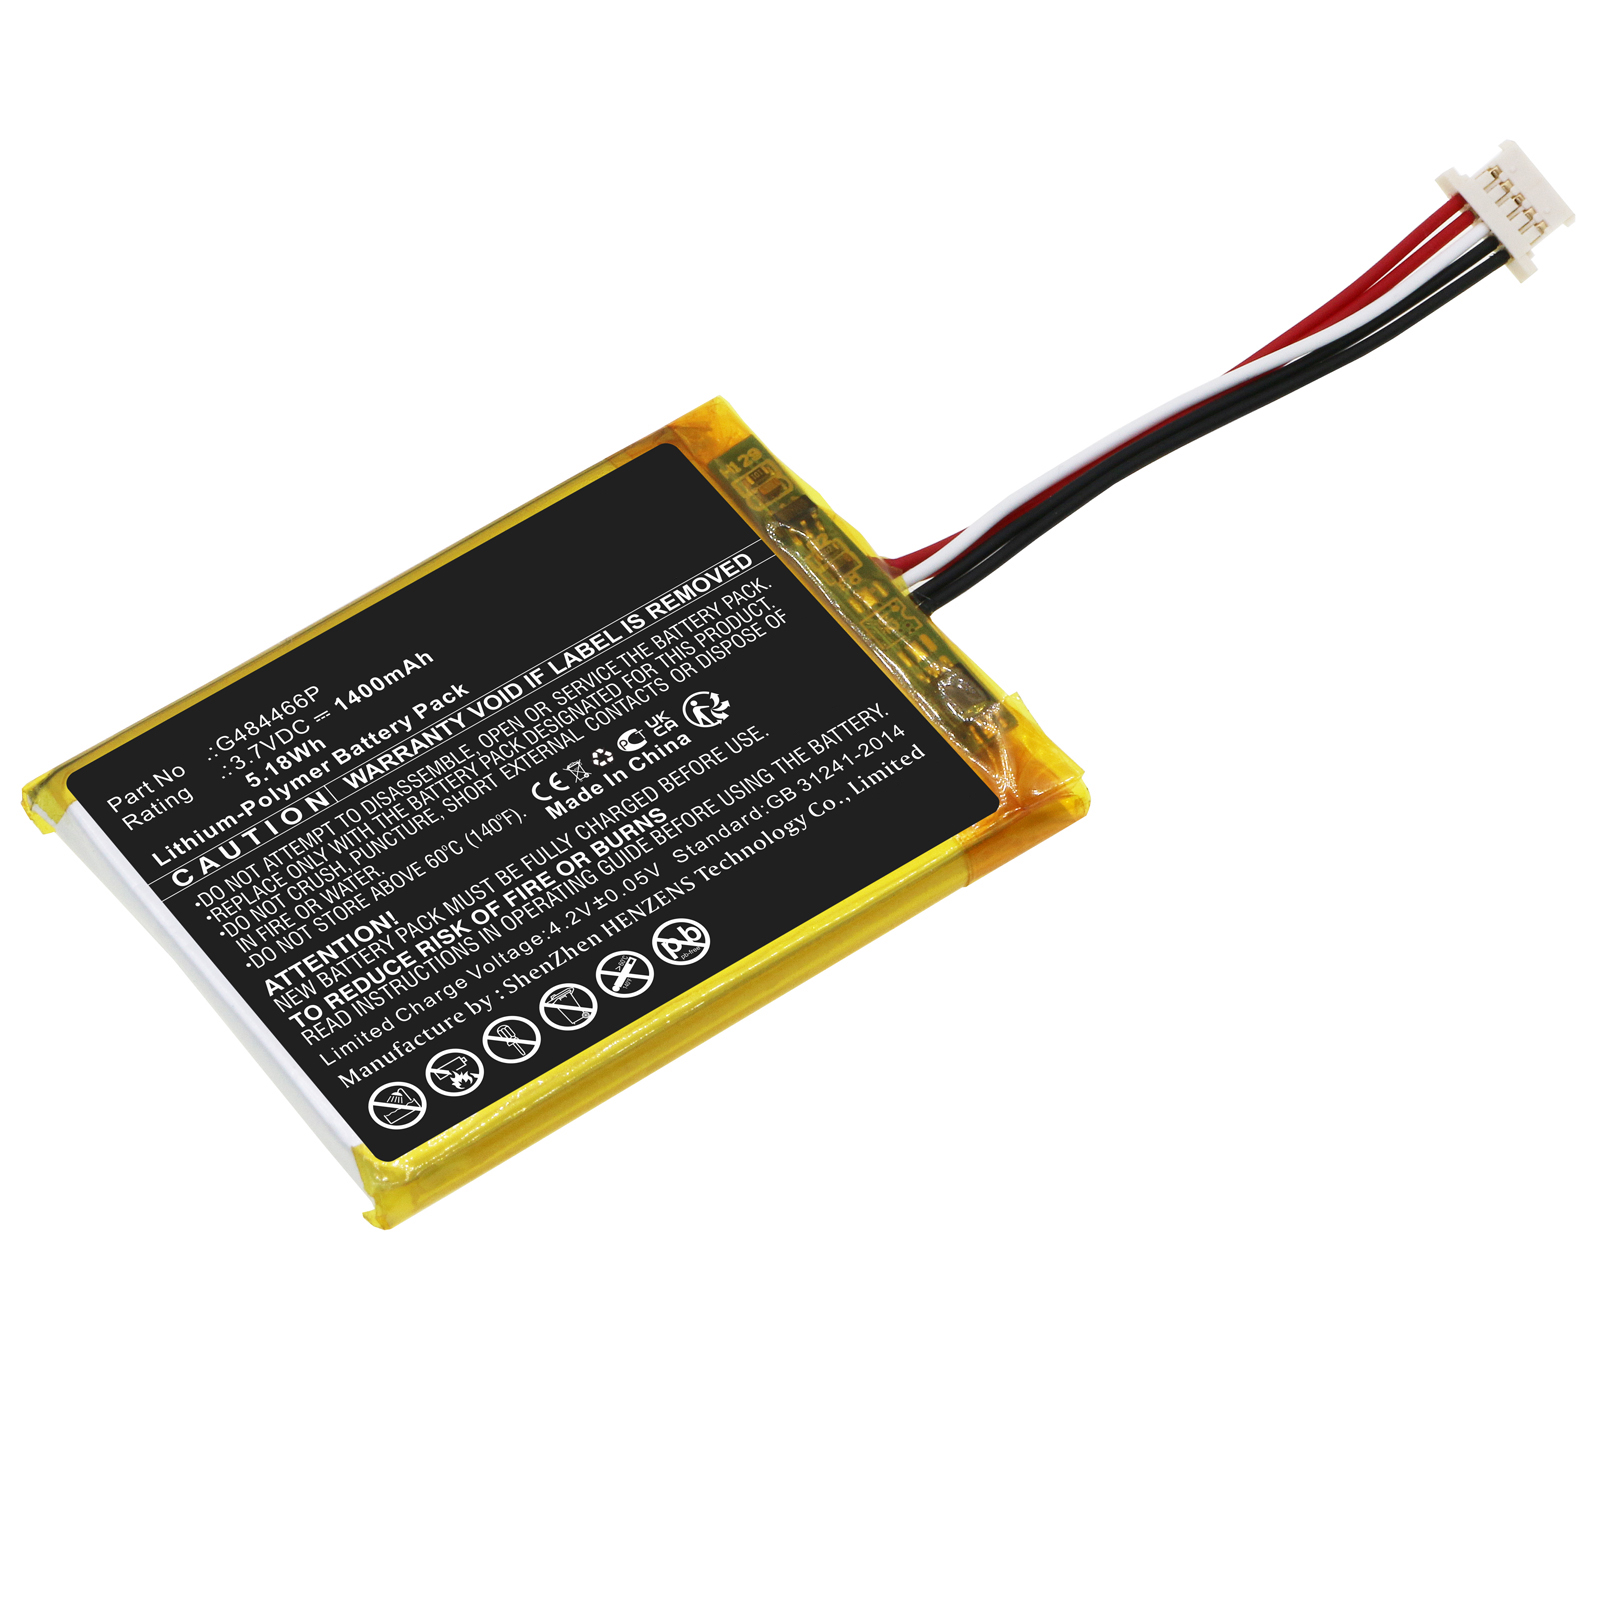 Synergy Digital GPS Battery, Compatible with Polar G484466P GPS Battery (Li-Pol, 3.7V, 1400mAh)